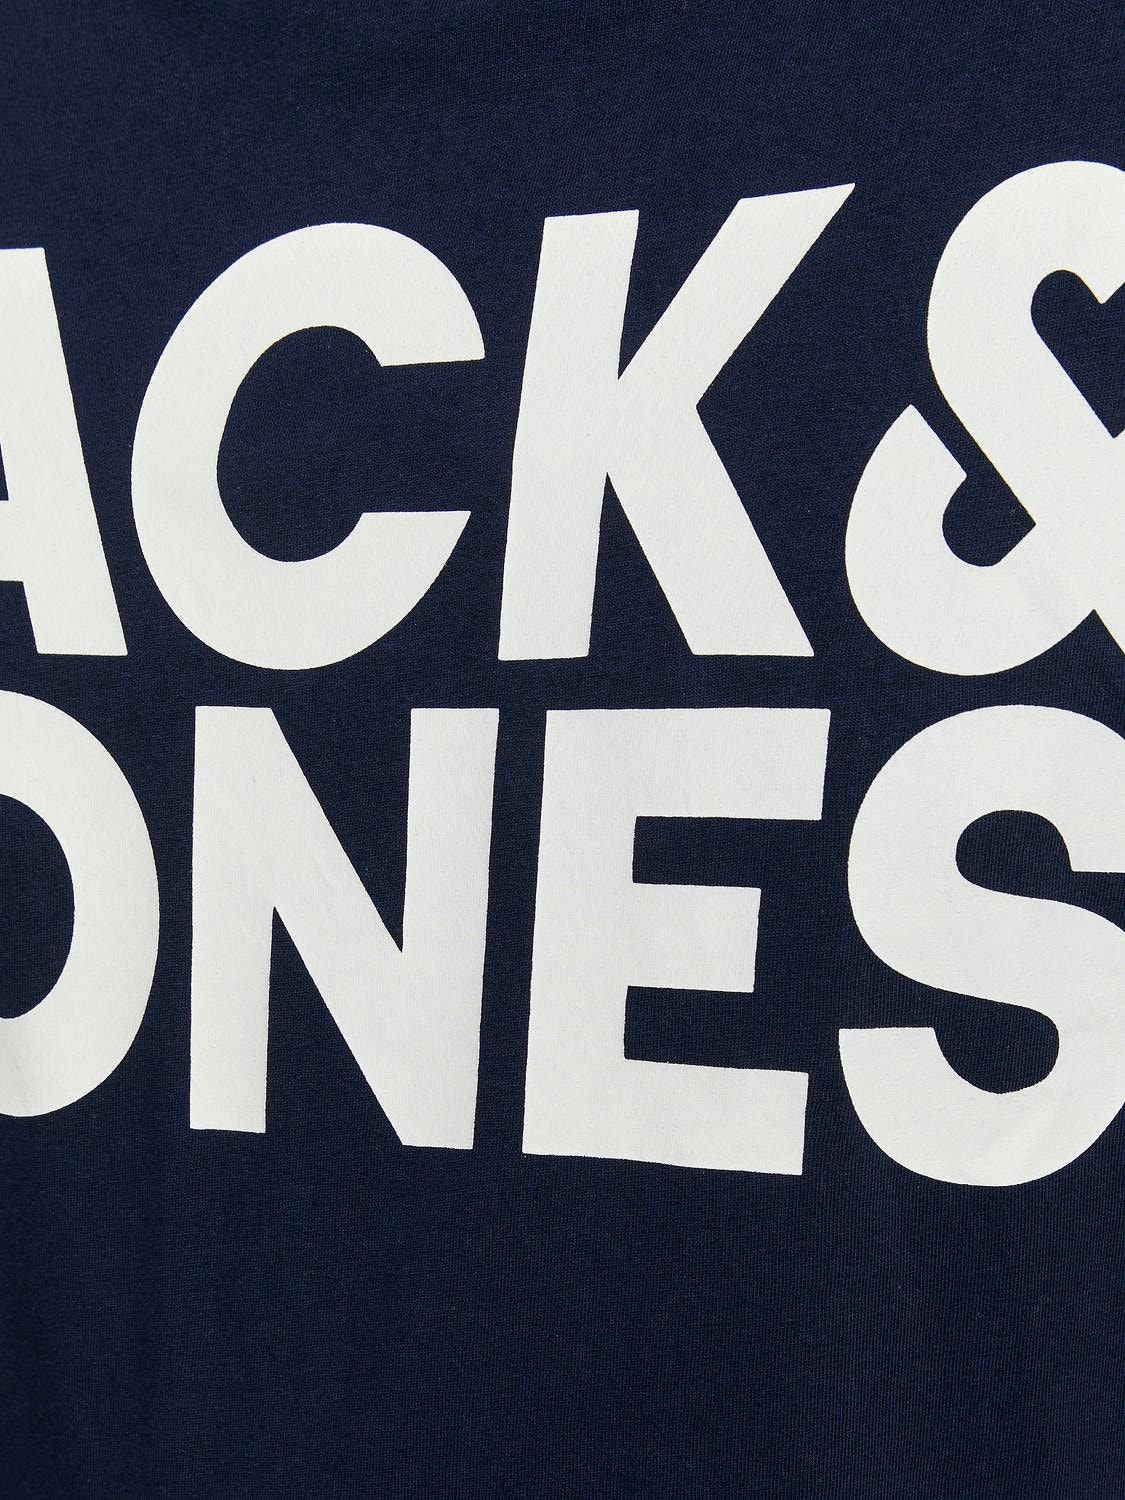 Jack & Jones Plus Logo T-särk -Navy Blazer - 12158505